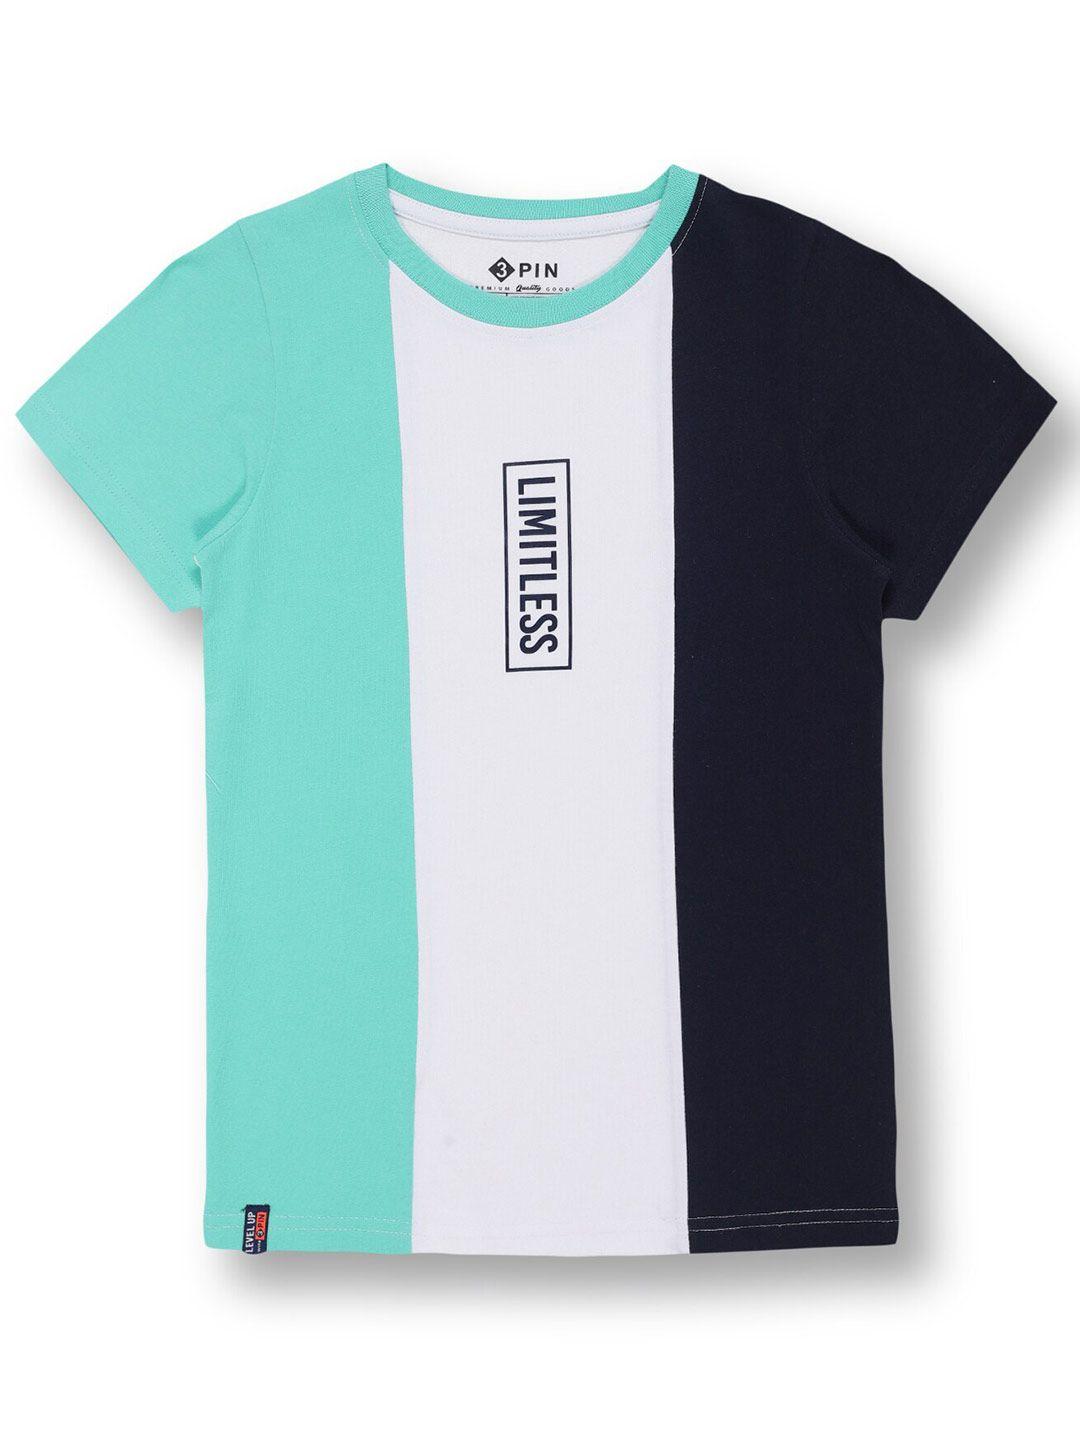 3pin boys colourblocked cotton t-shirt